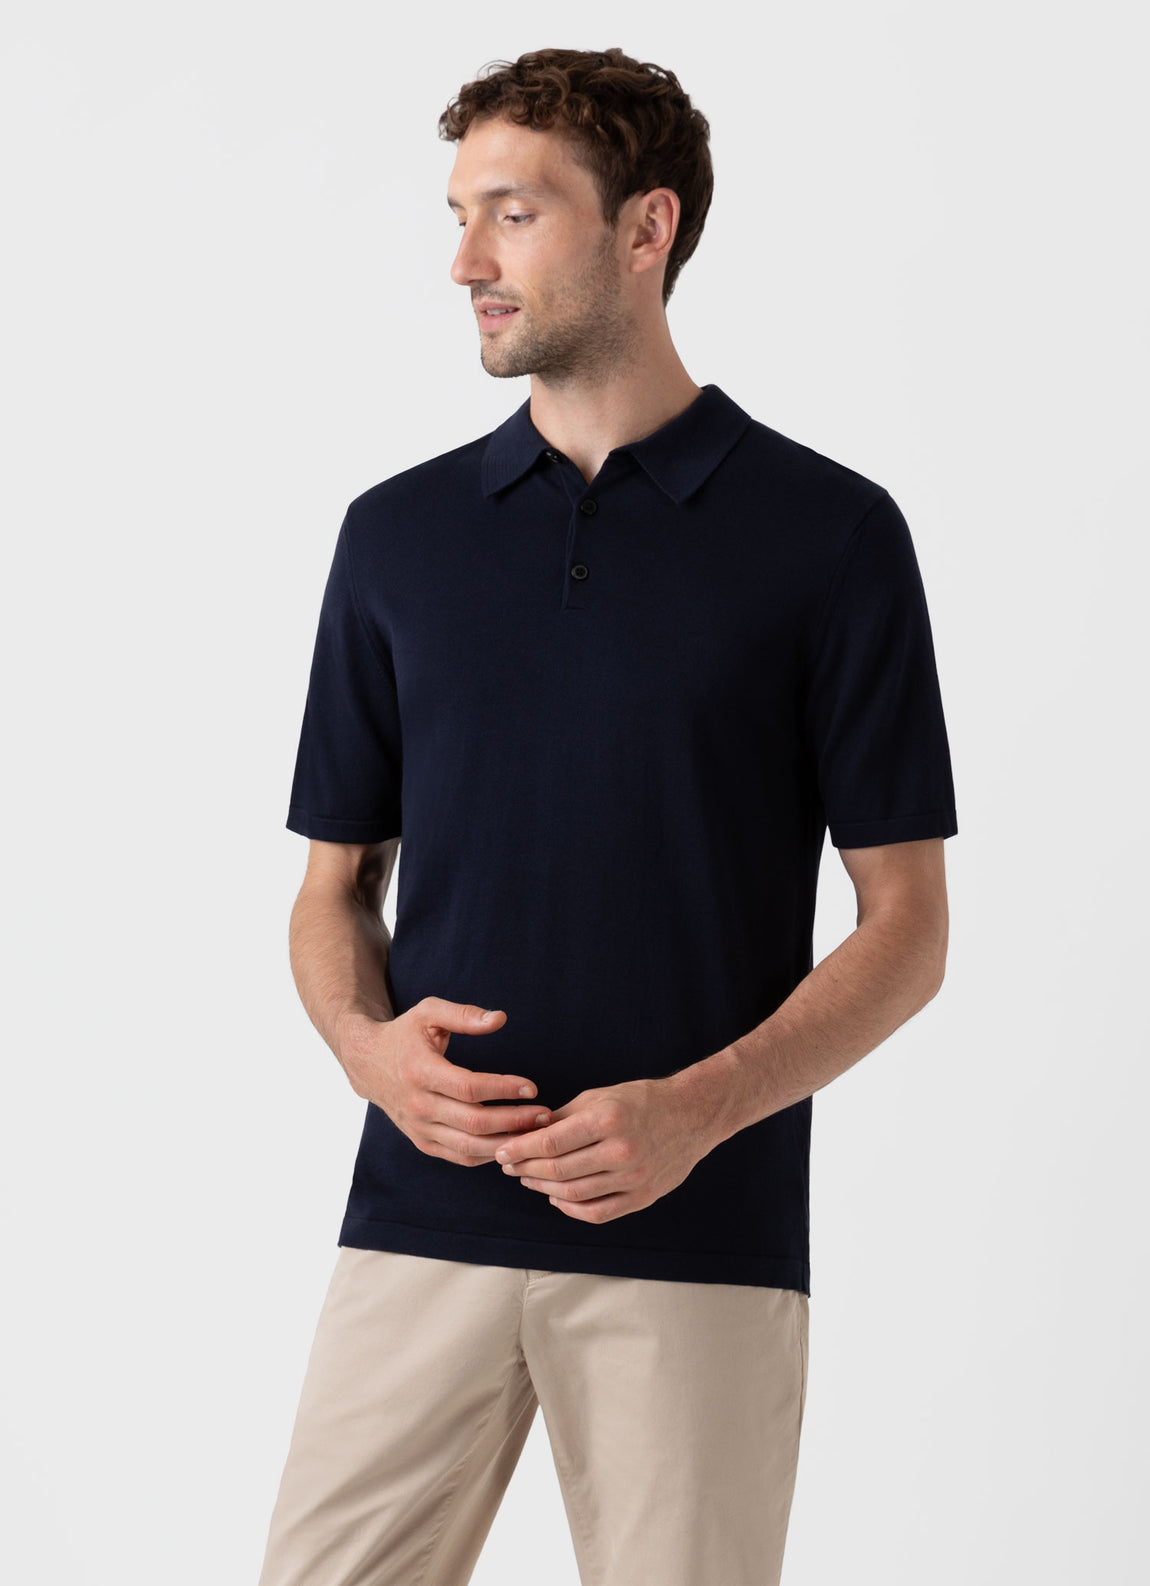 Men's Sea Island Cotton Polo Shirt in Light Navy | Sunspel